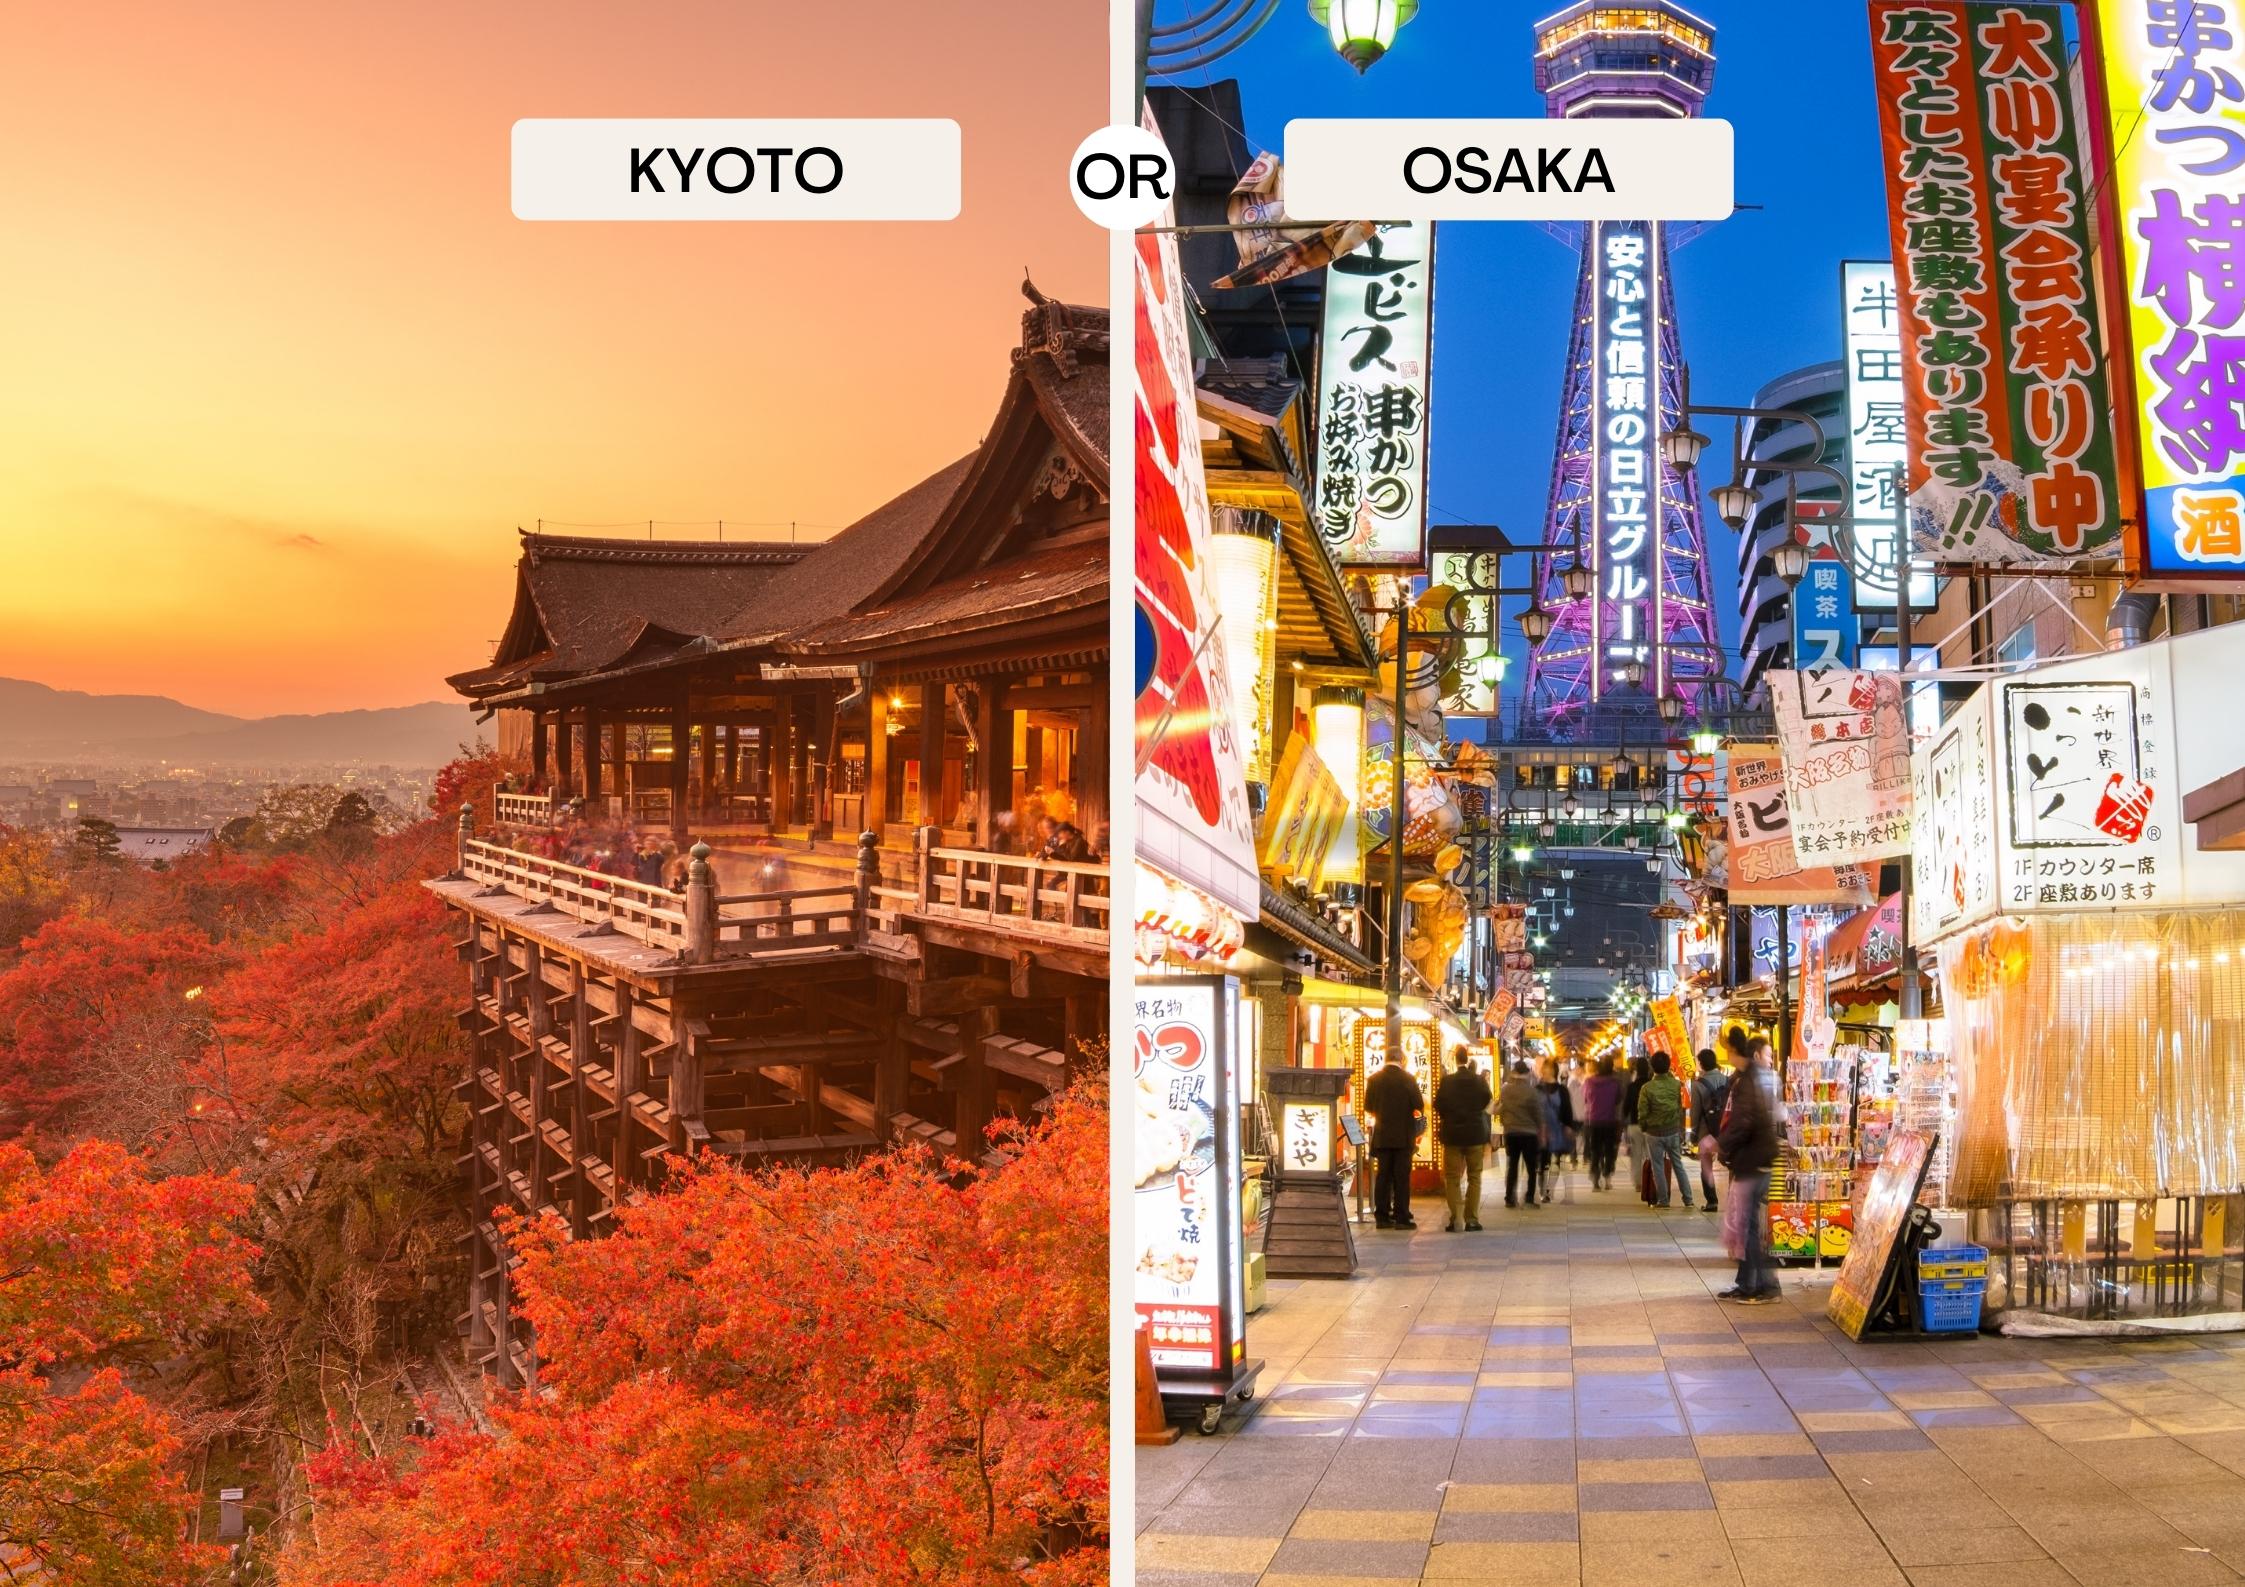 Kyoto vs Osaka which one to visit